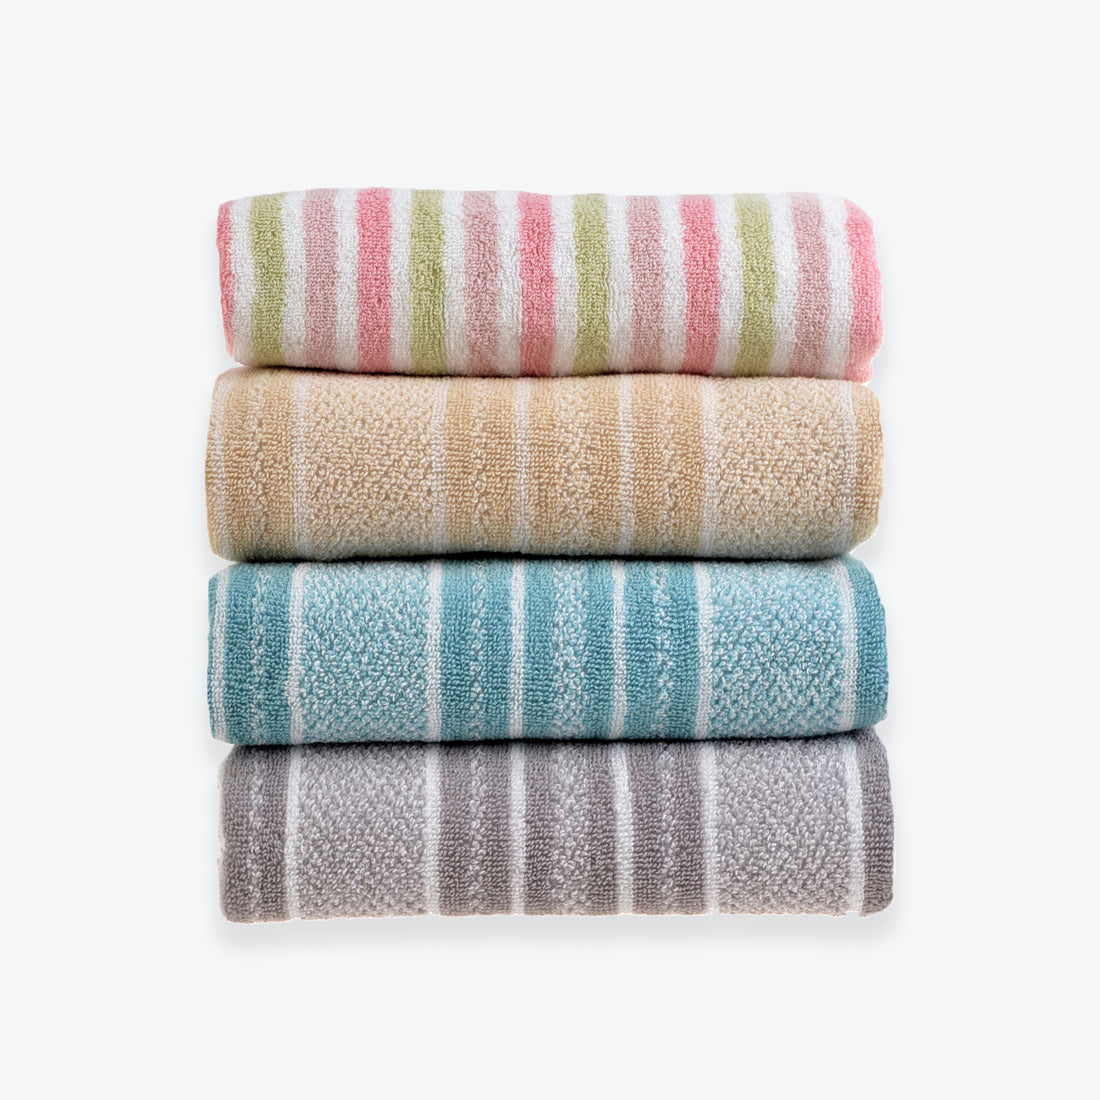 Striped Patterned Towels - Hand Towel, Bath Towel, Bath Sheet